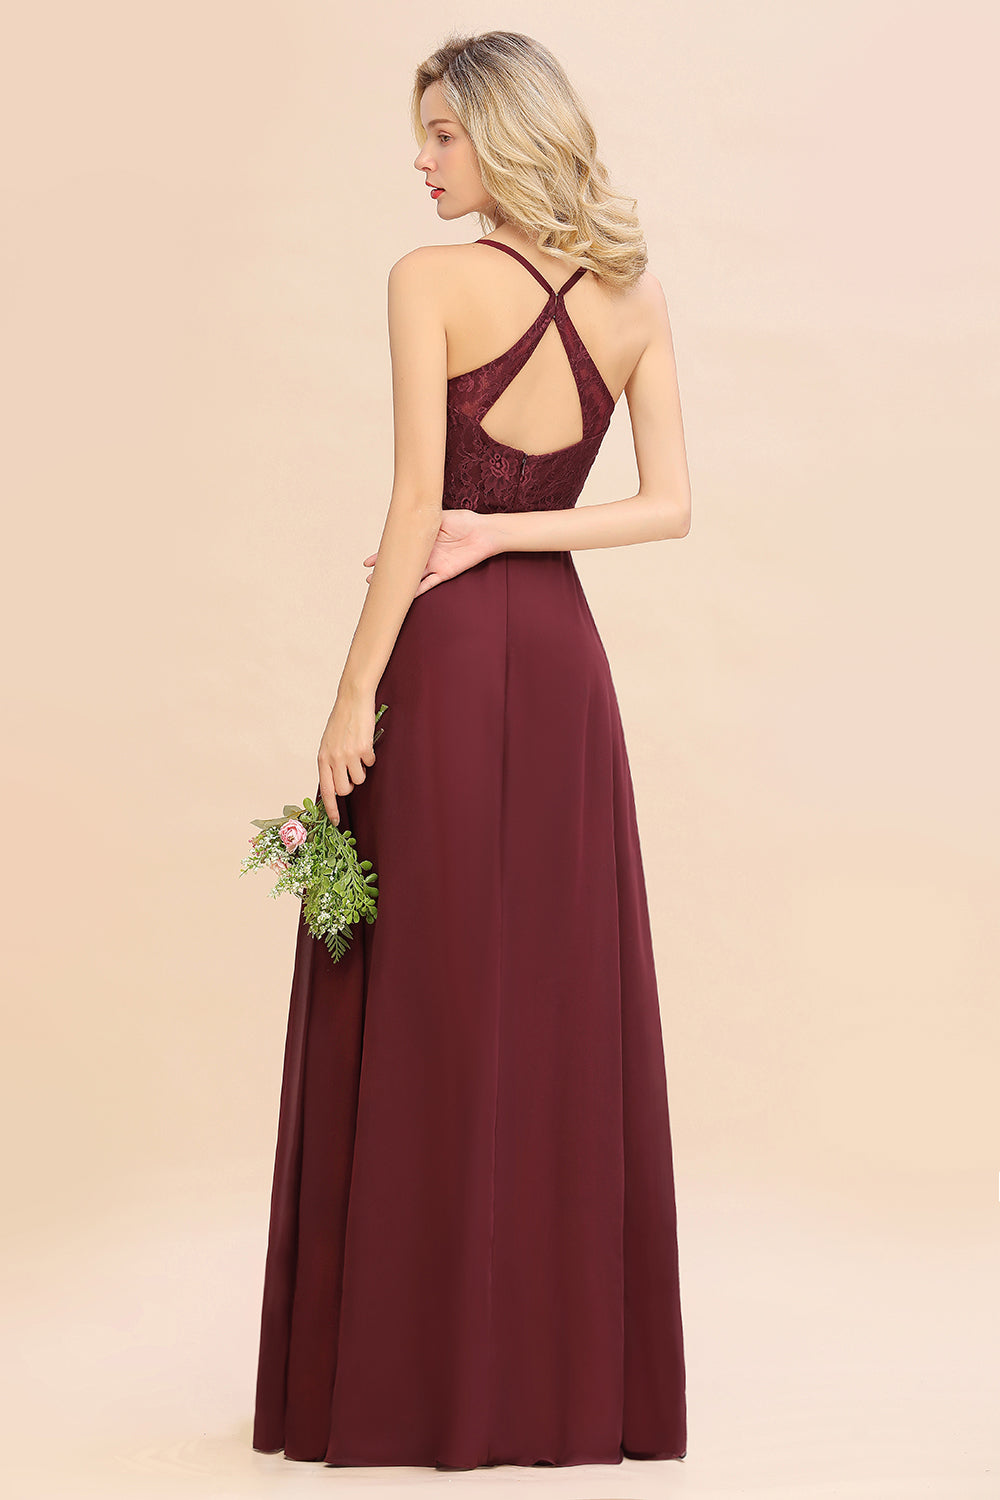 Elegant CrissCross Back Burgundy Lace Bridesmaid Dress With Spaghetti Straps